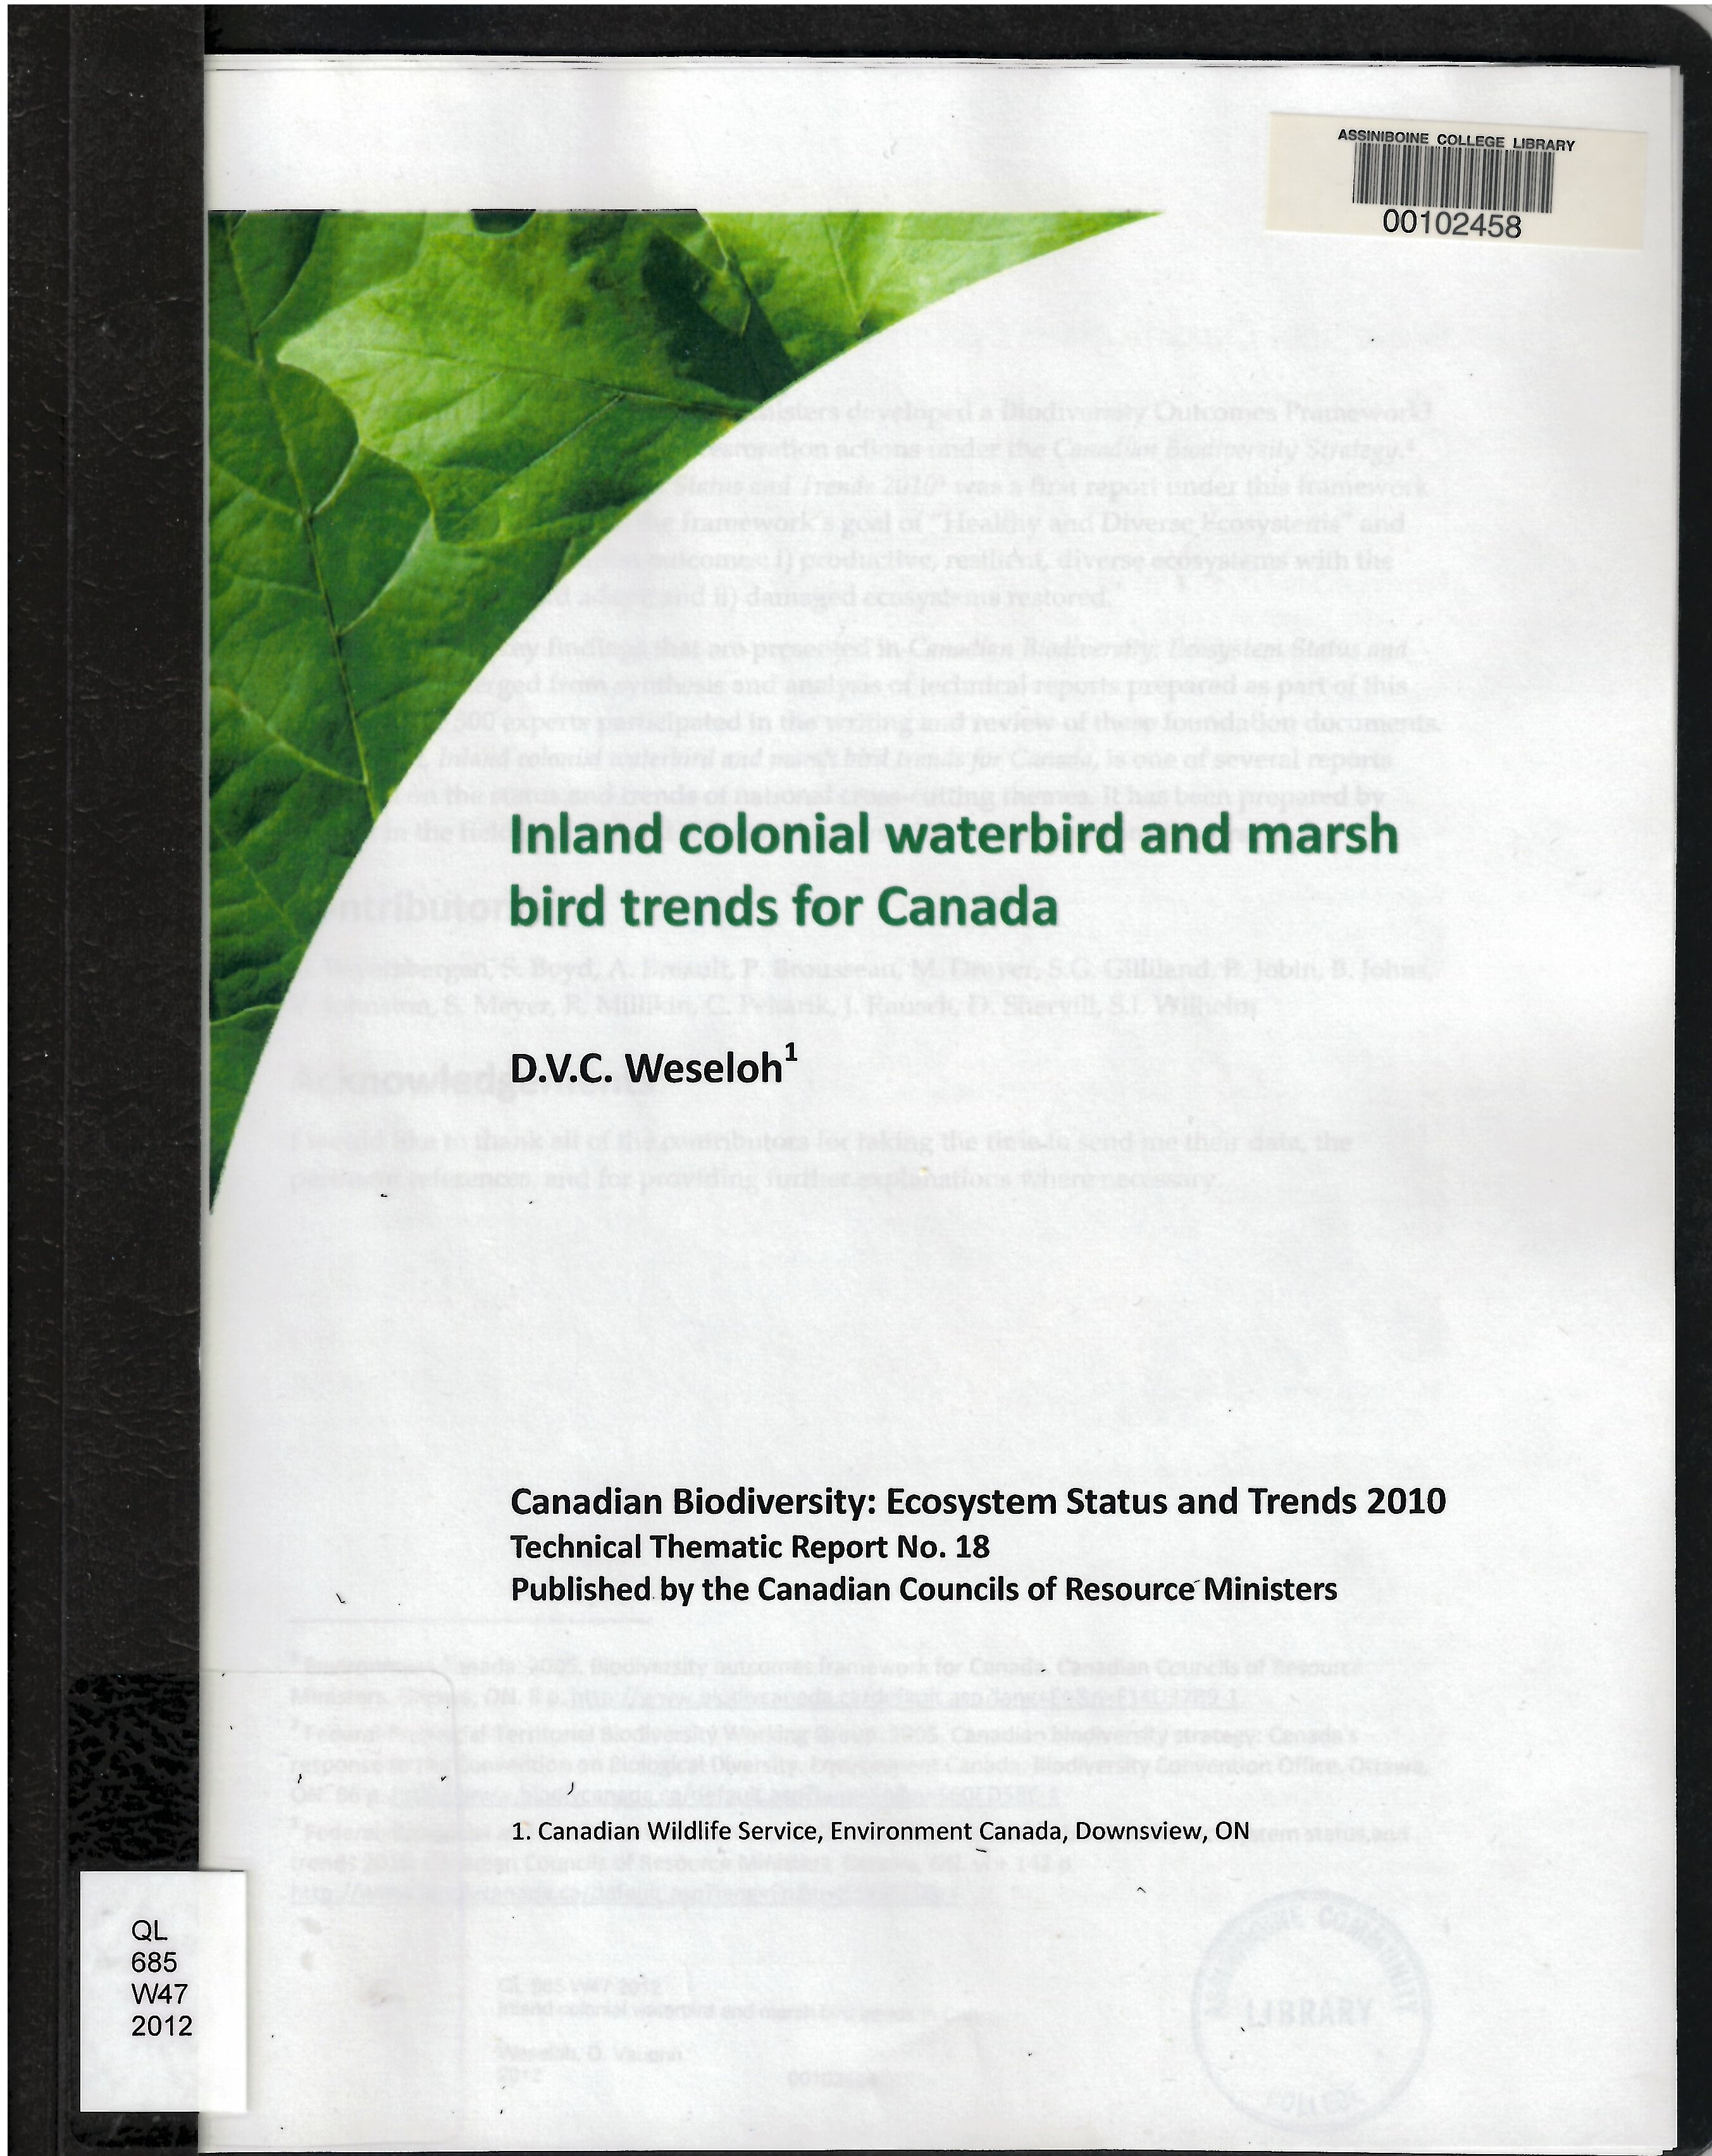 Inland colonial waterbird and marsh bird trends in Canada